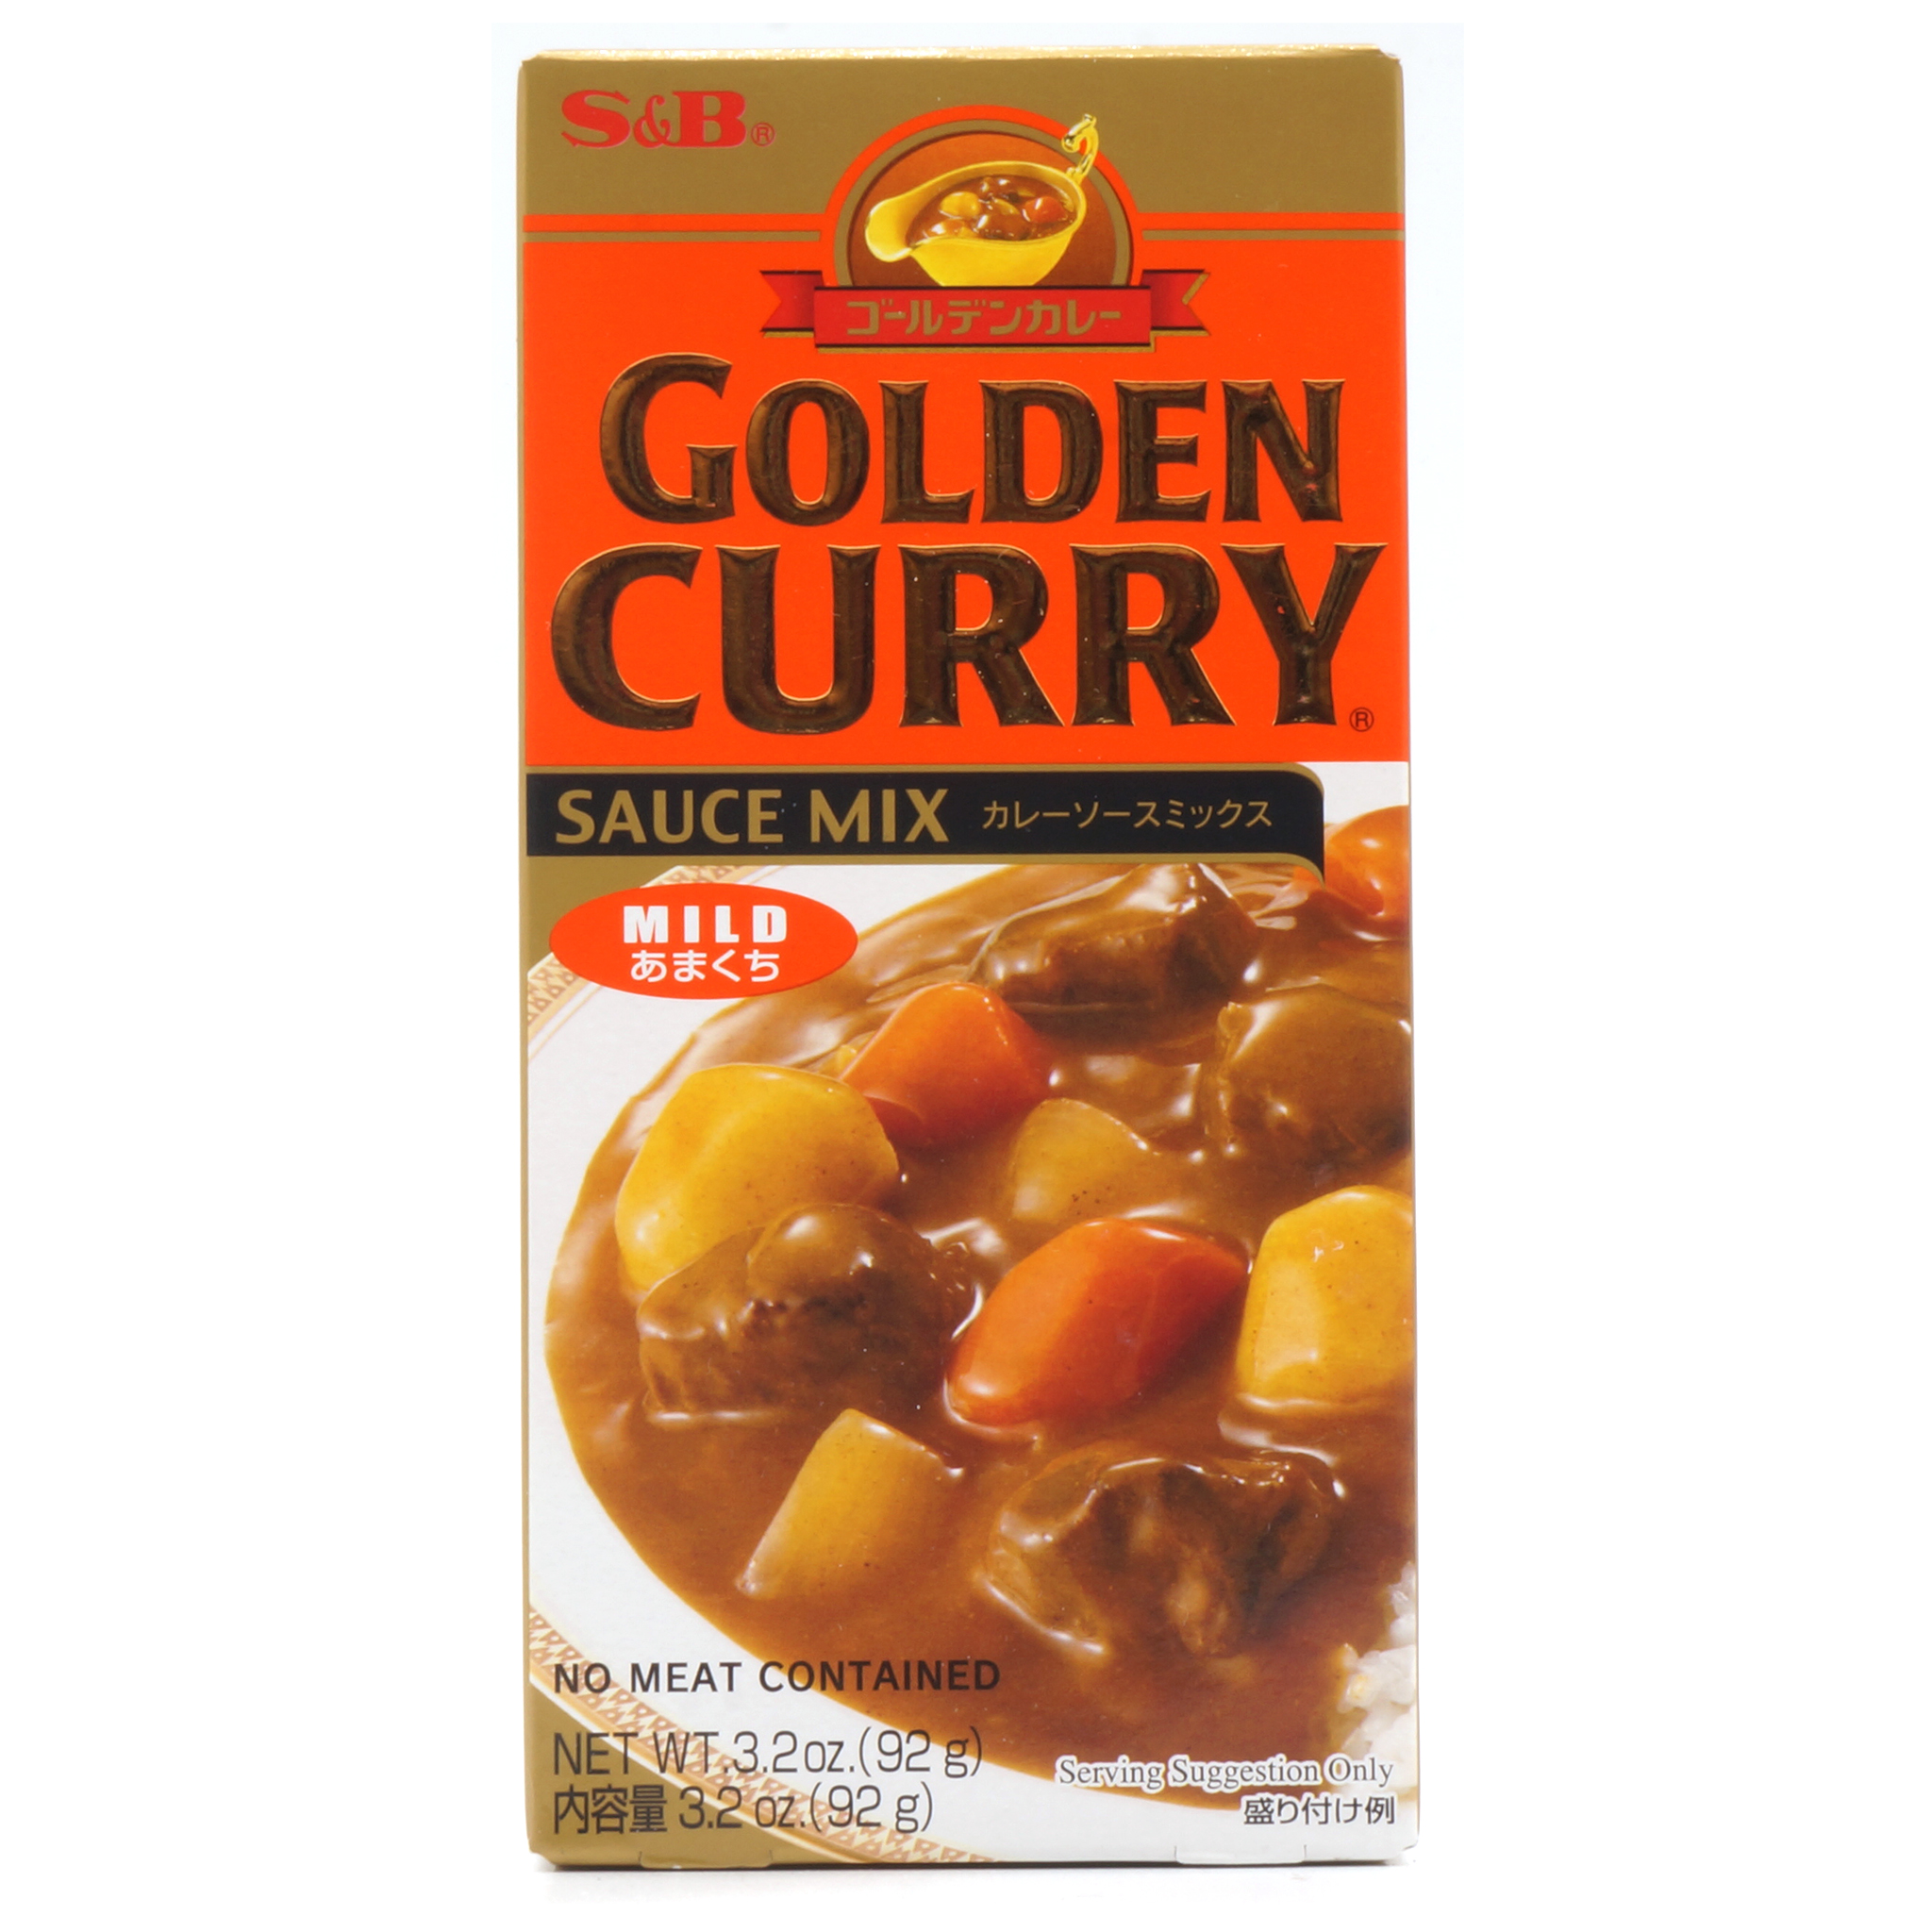 Golden Curry Mild - S&B - 92g